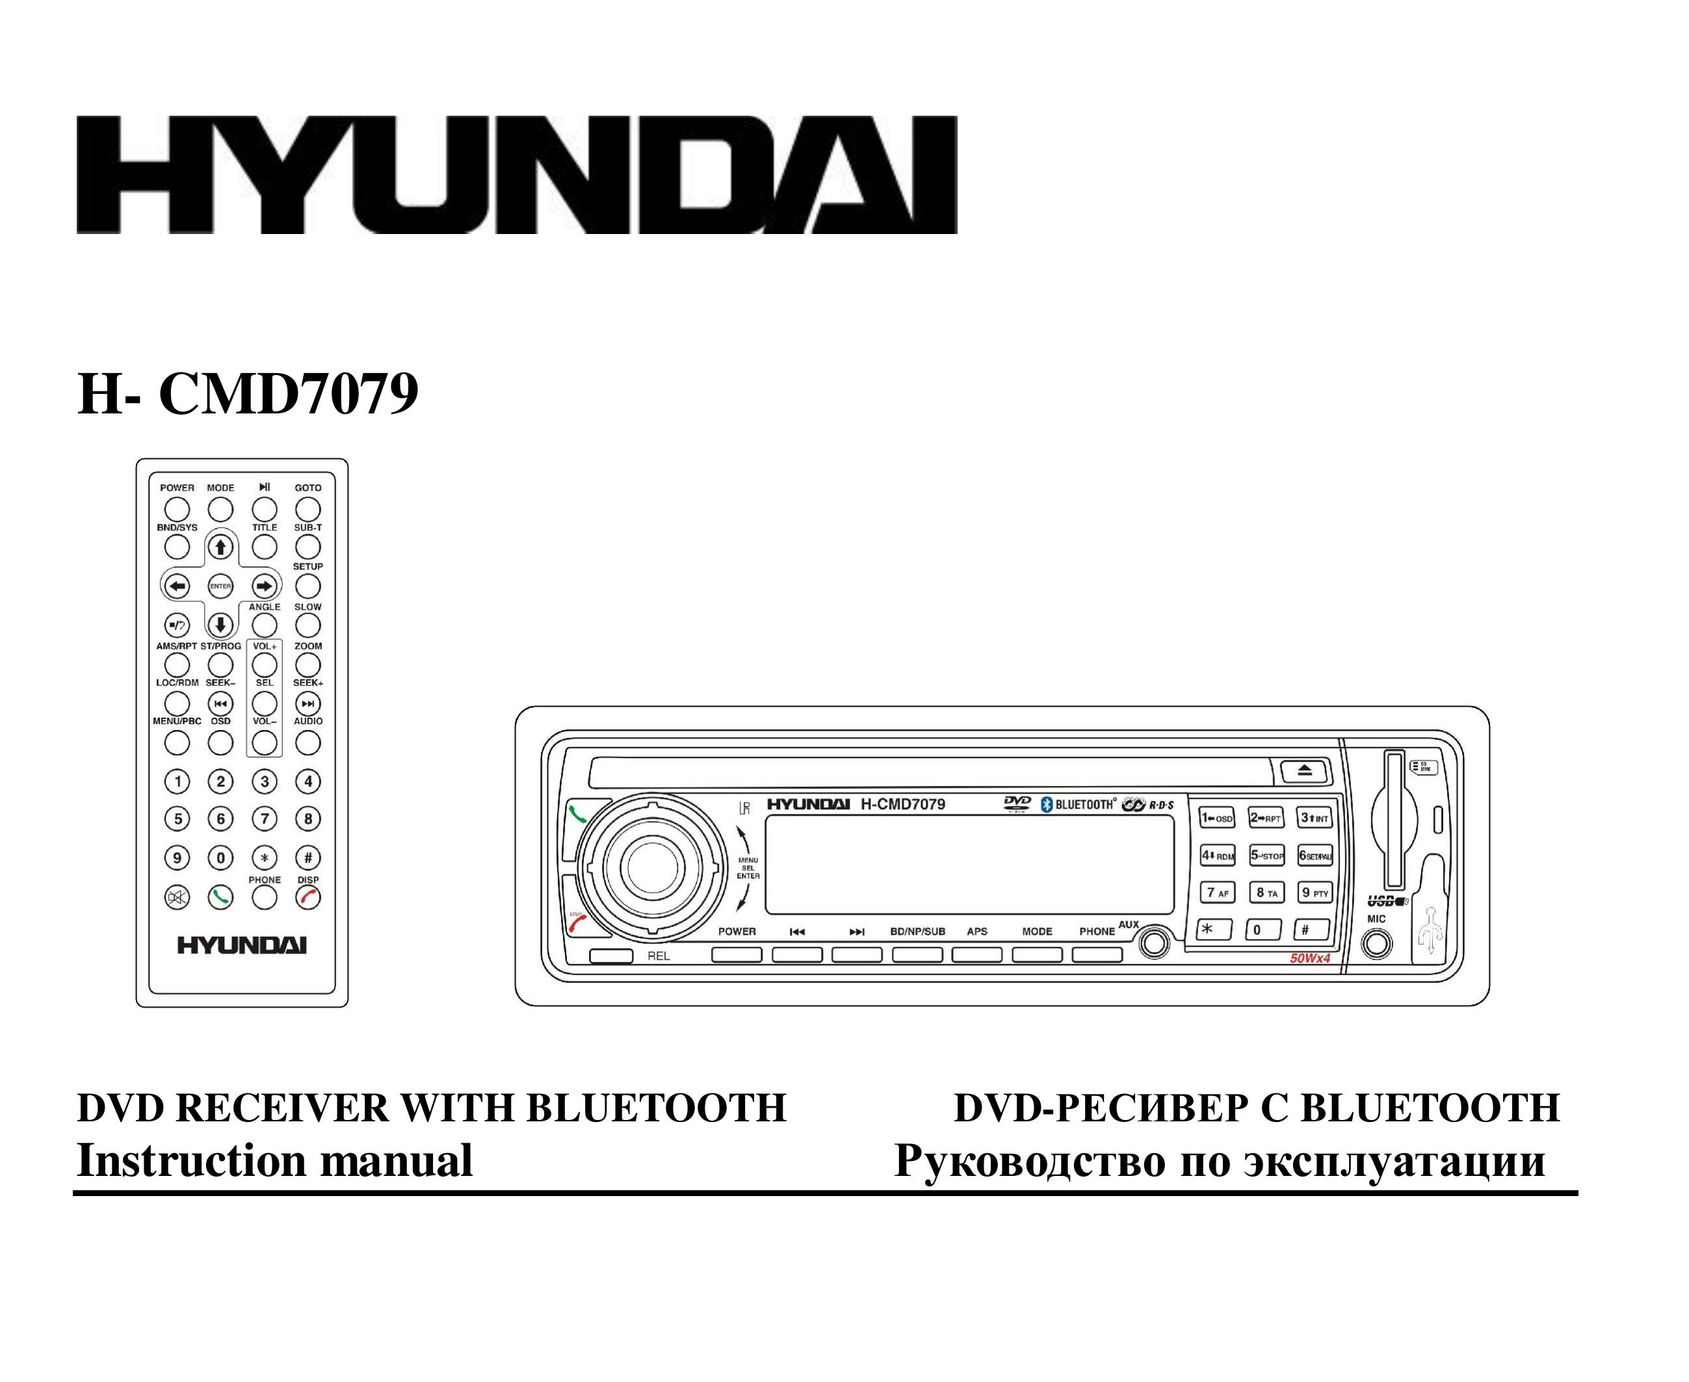 Hyundai H- CMD7079 Car Video System User Manual